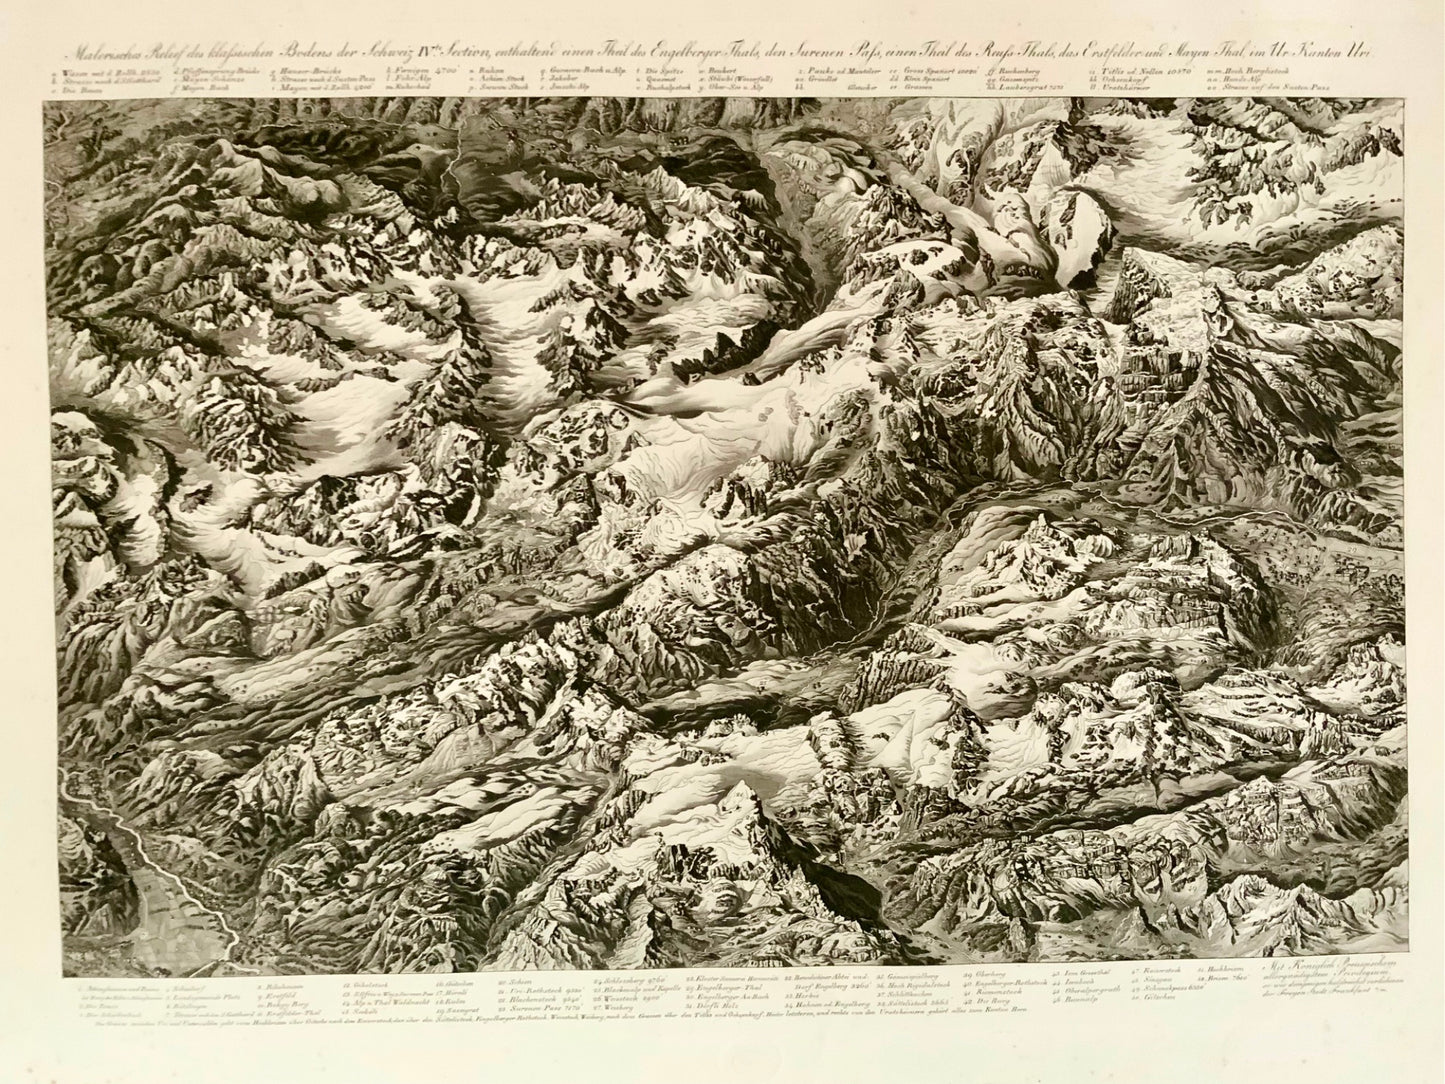 1831 Atlas of the Alps, Switzerland, Delkeskamp, 9 aquatints in card folder